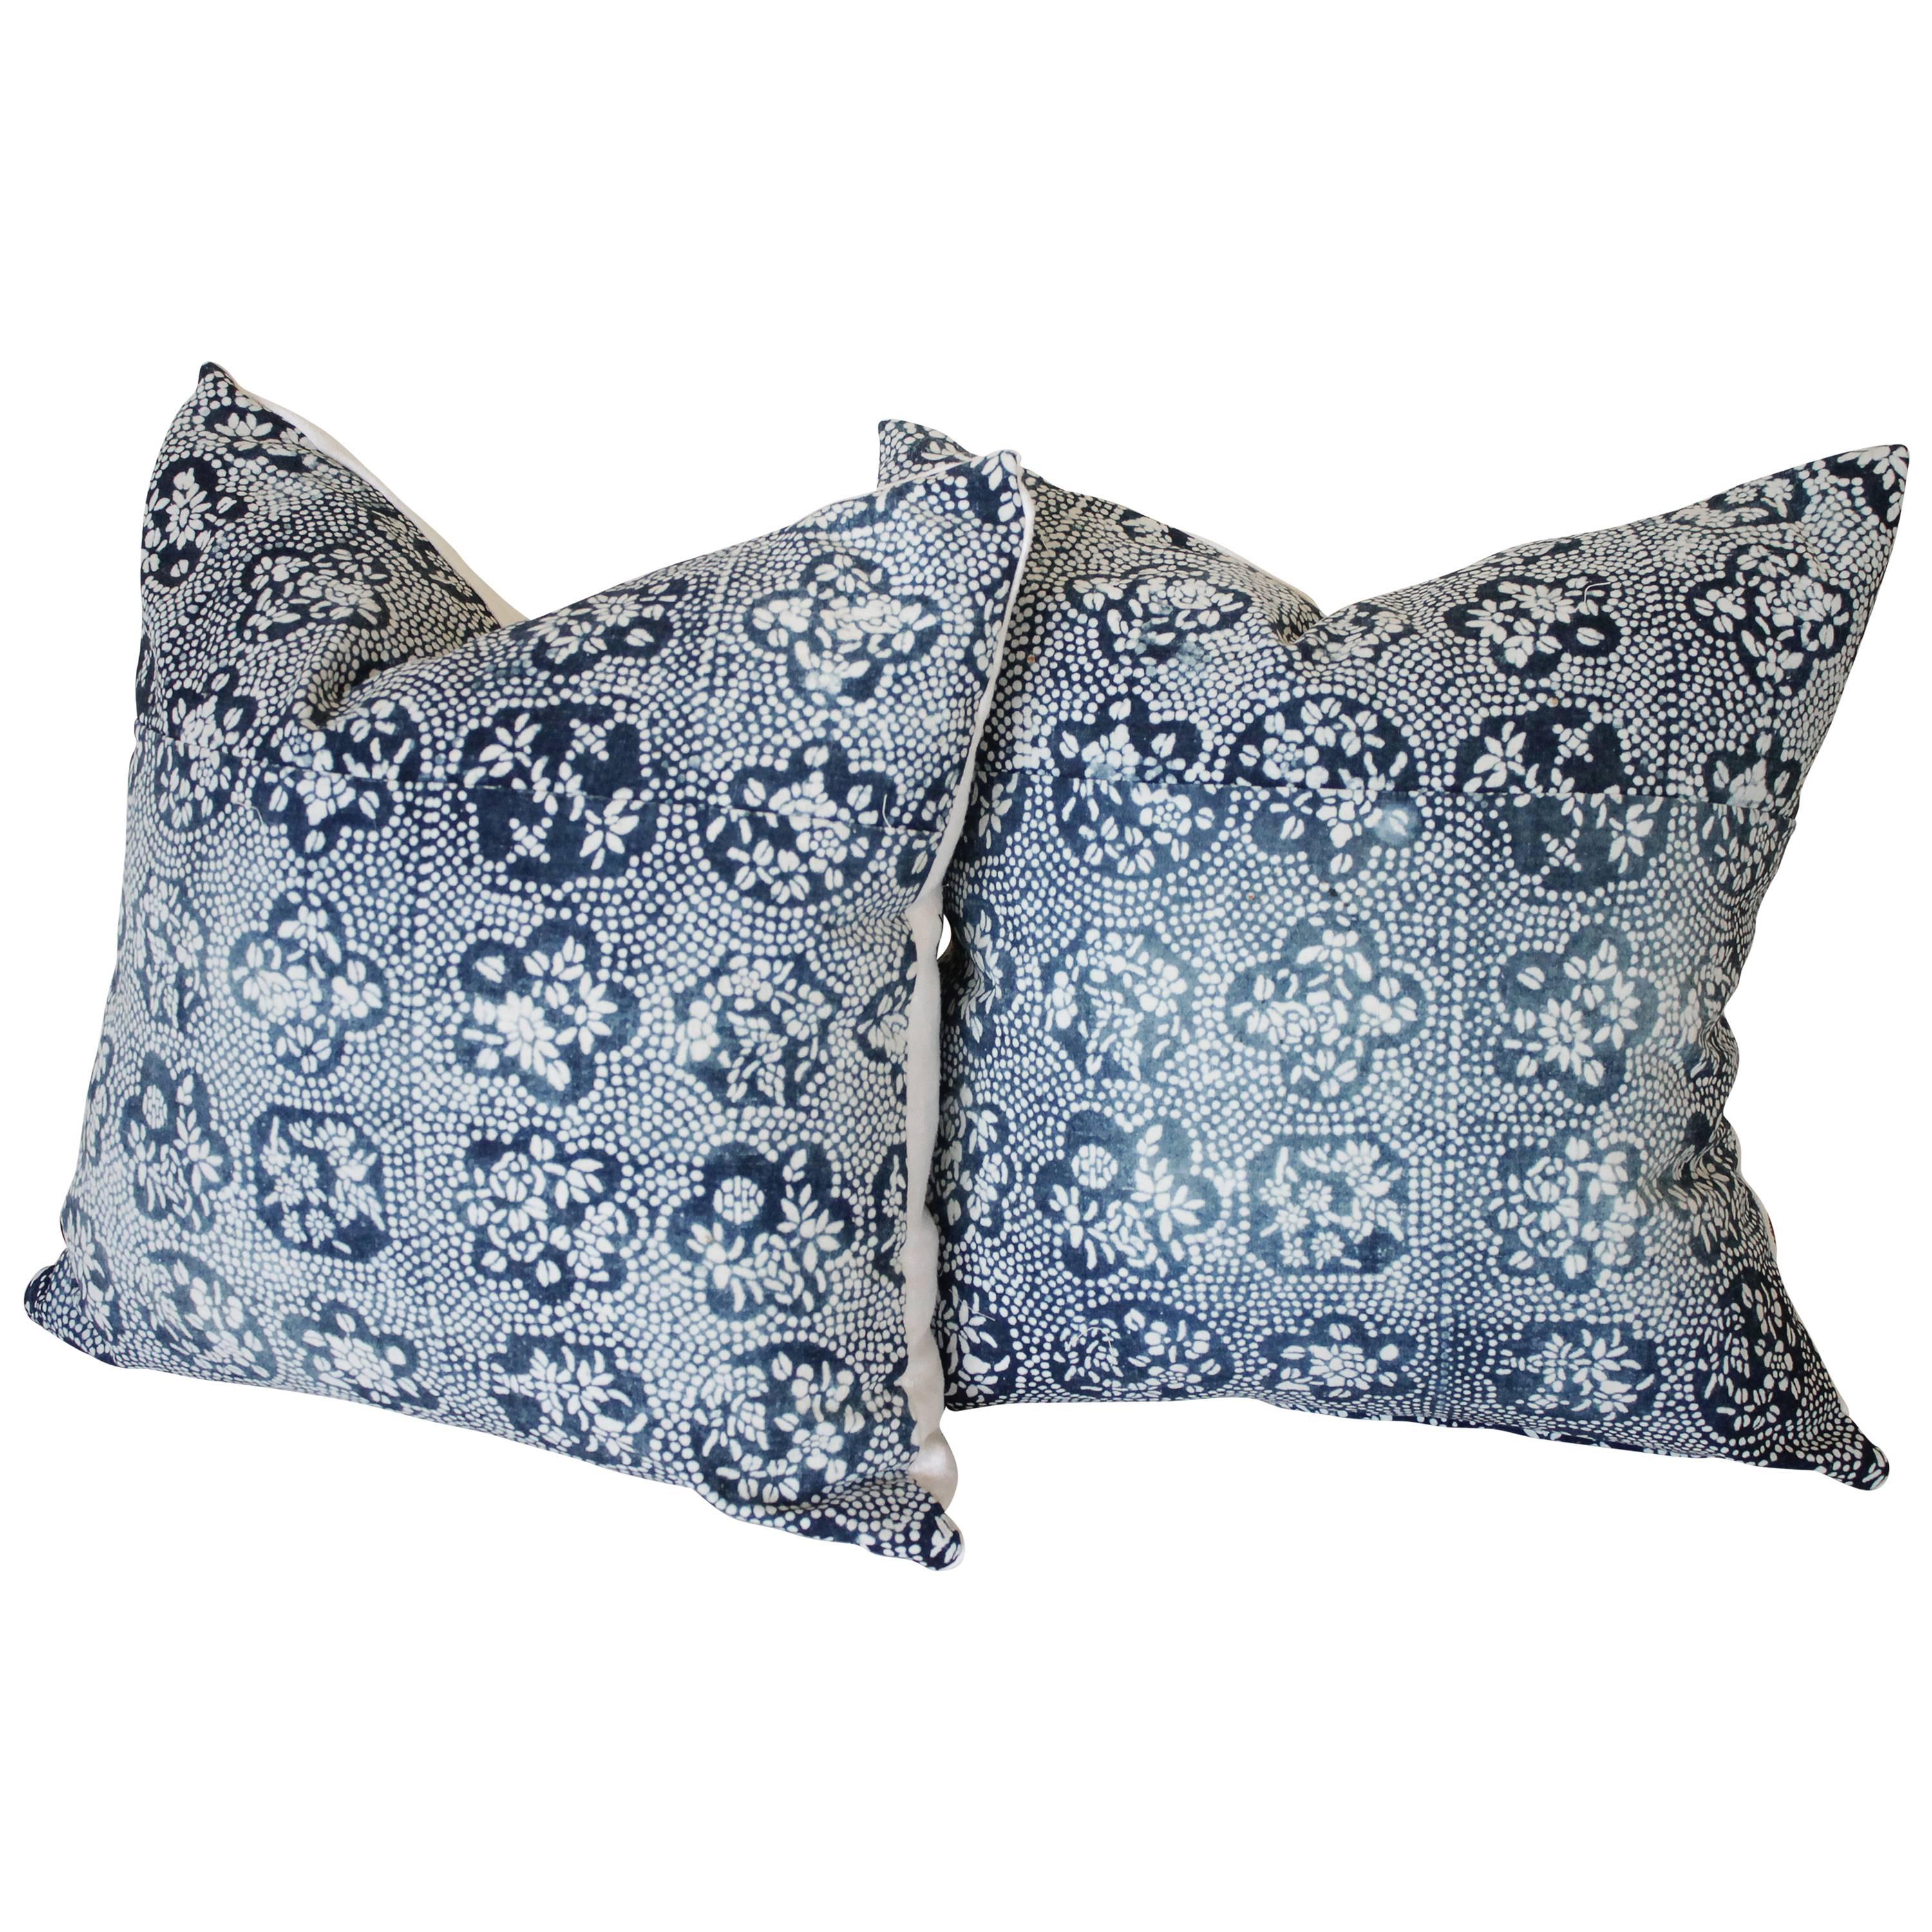 Pair of Vintage Blue Batik Japanese Indigo Floral Pillow Shams